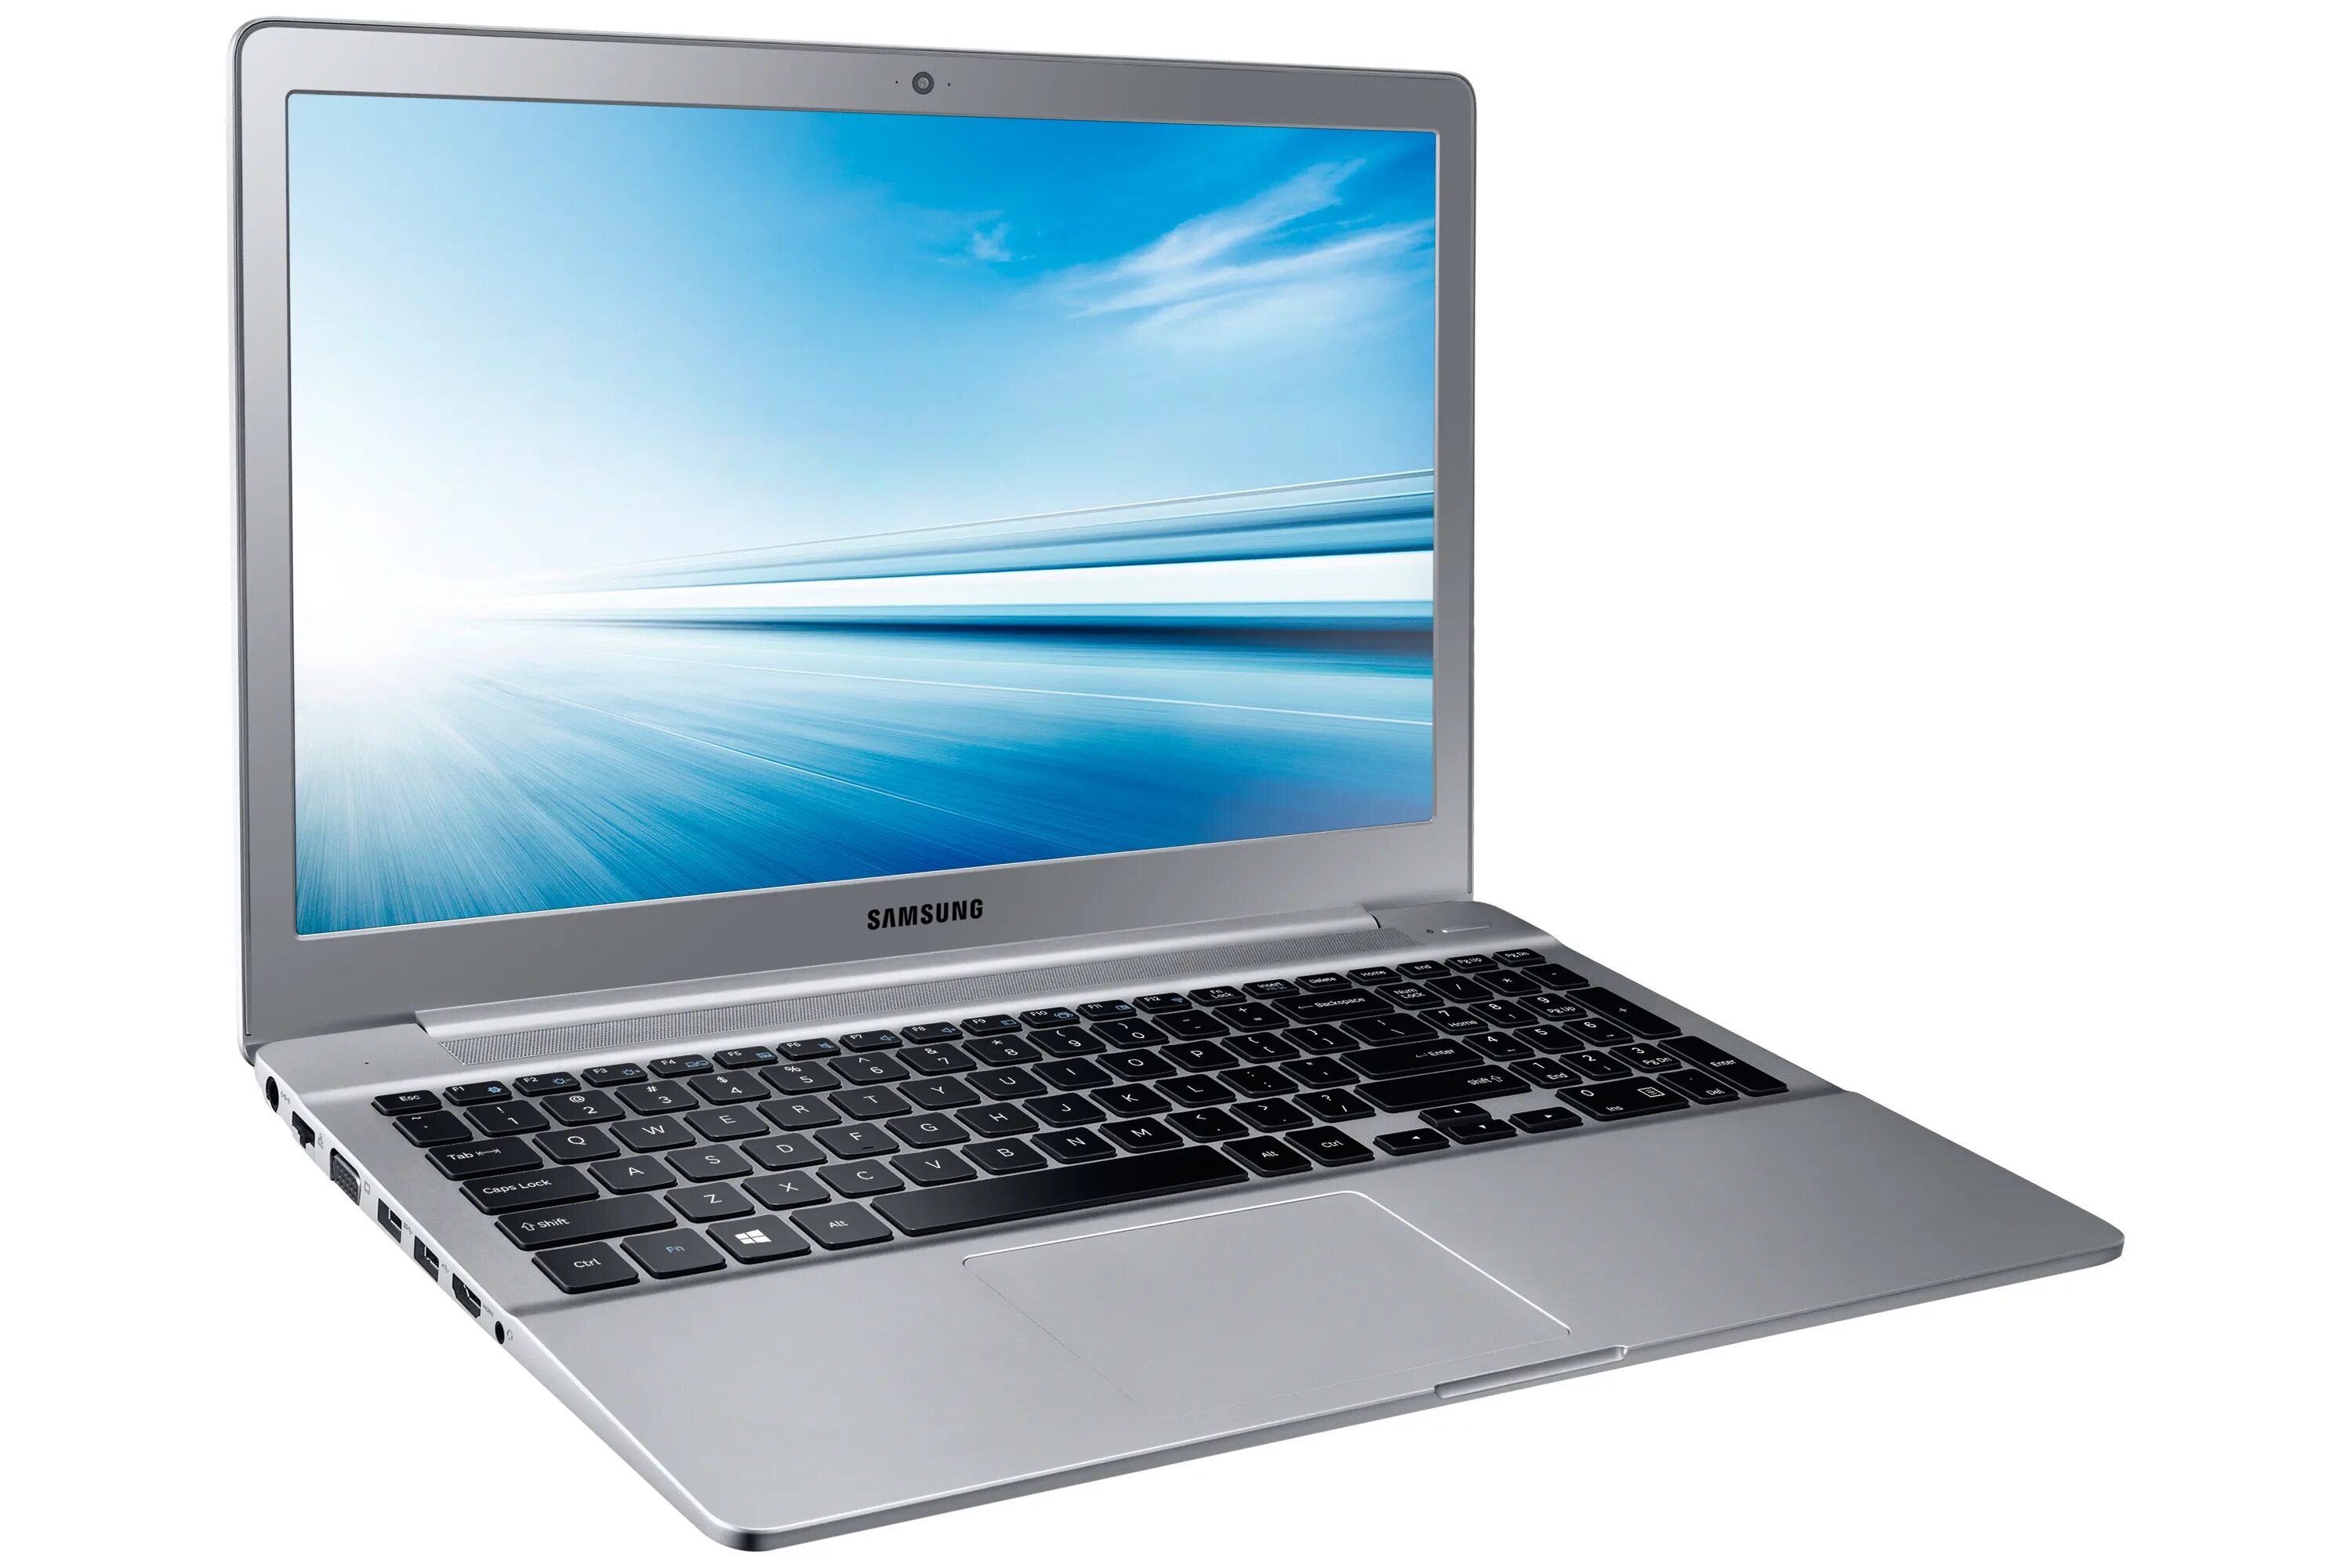 Ноутбук самсунг серебристый. Ноутбук Samsung серебристый i3. Самсунг nt300e5k. Ноутбук самсунг серый.